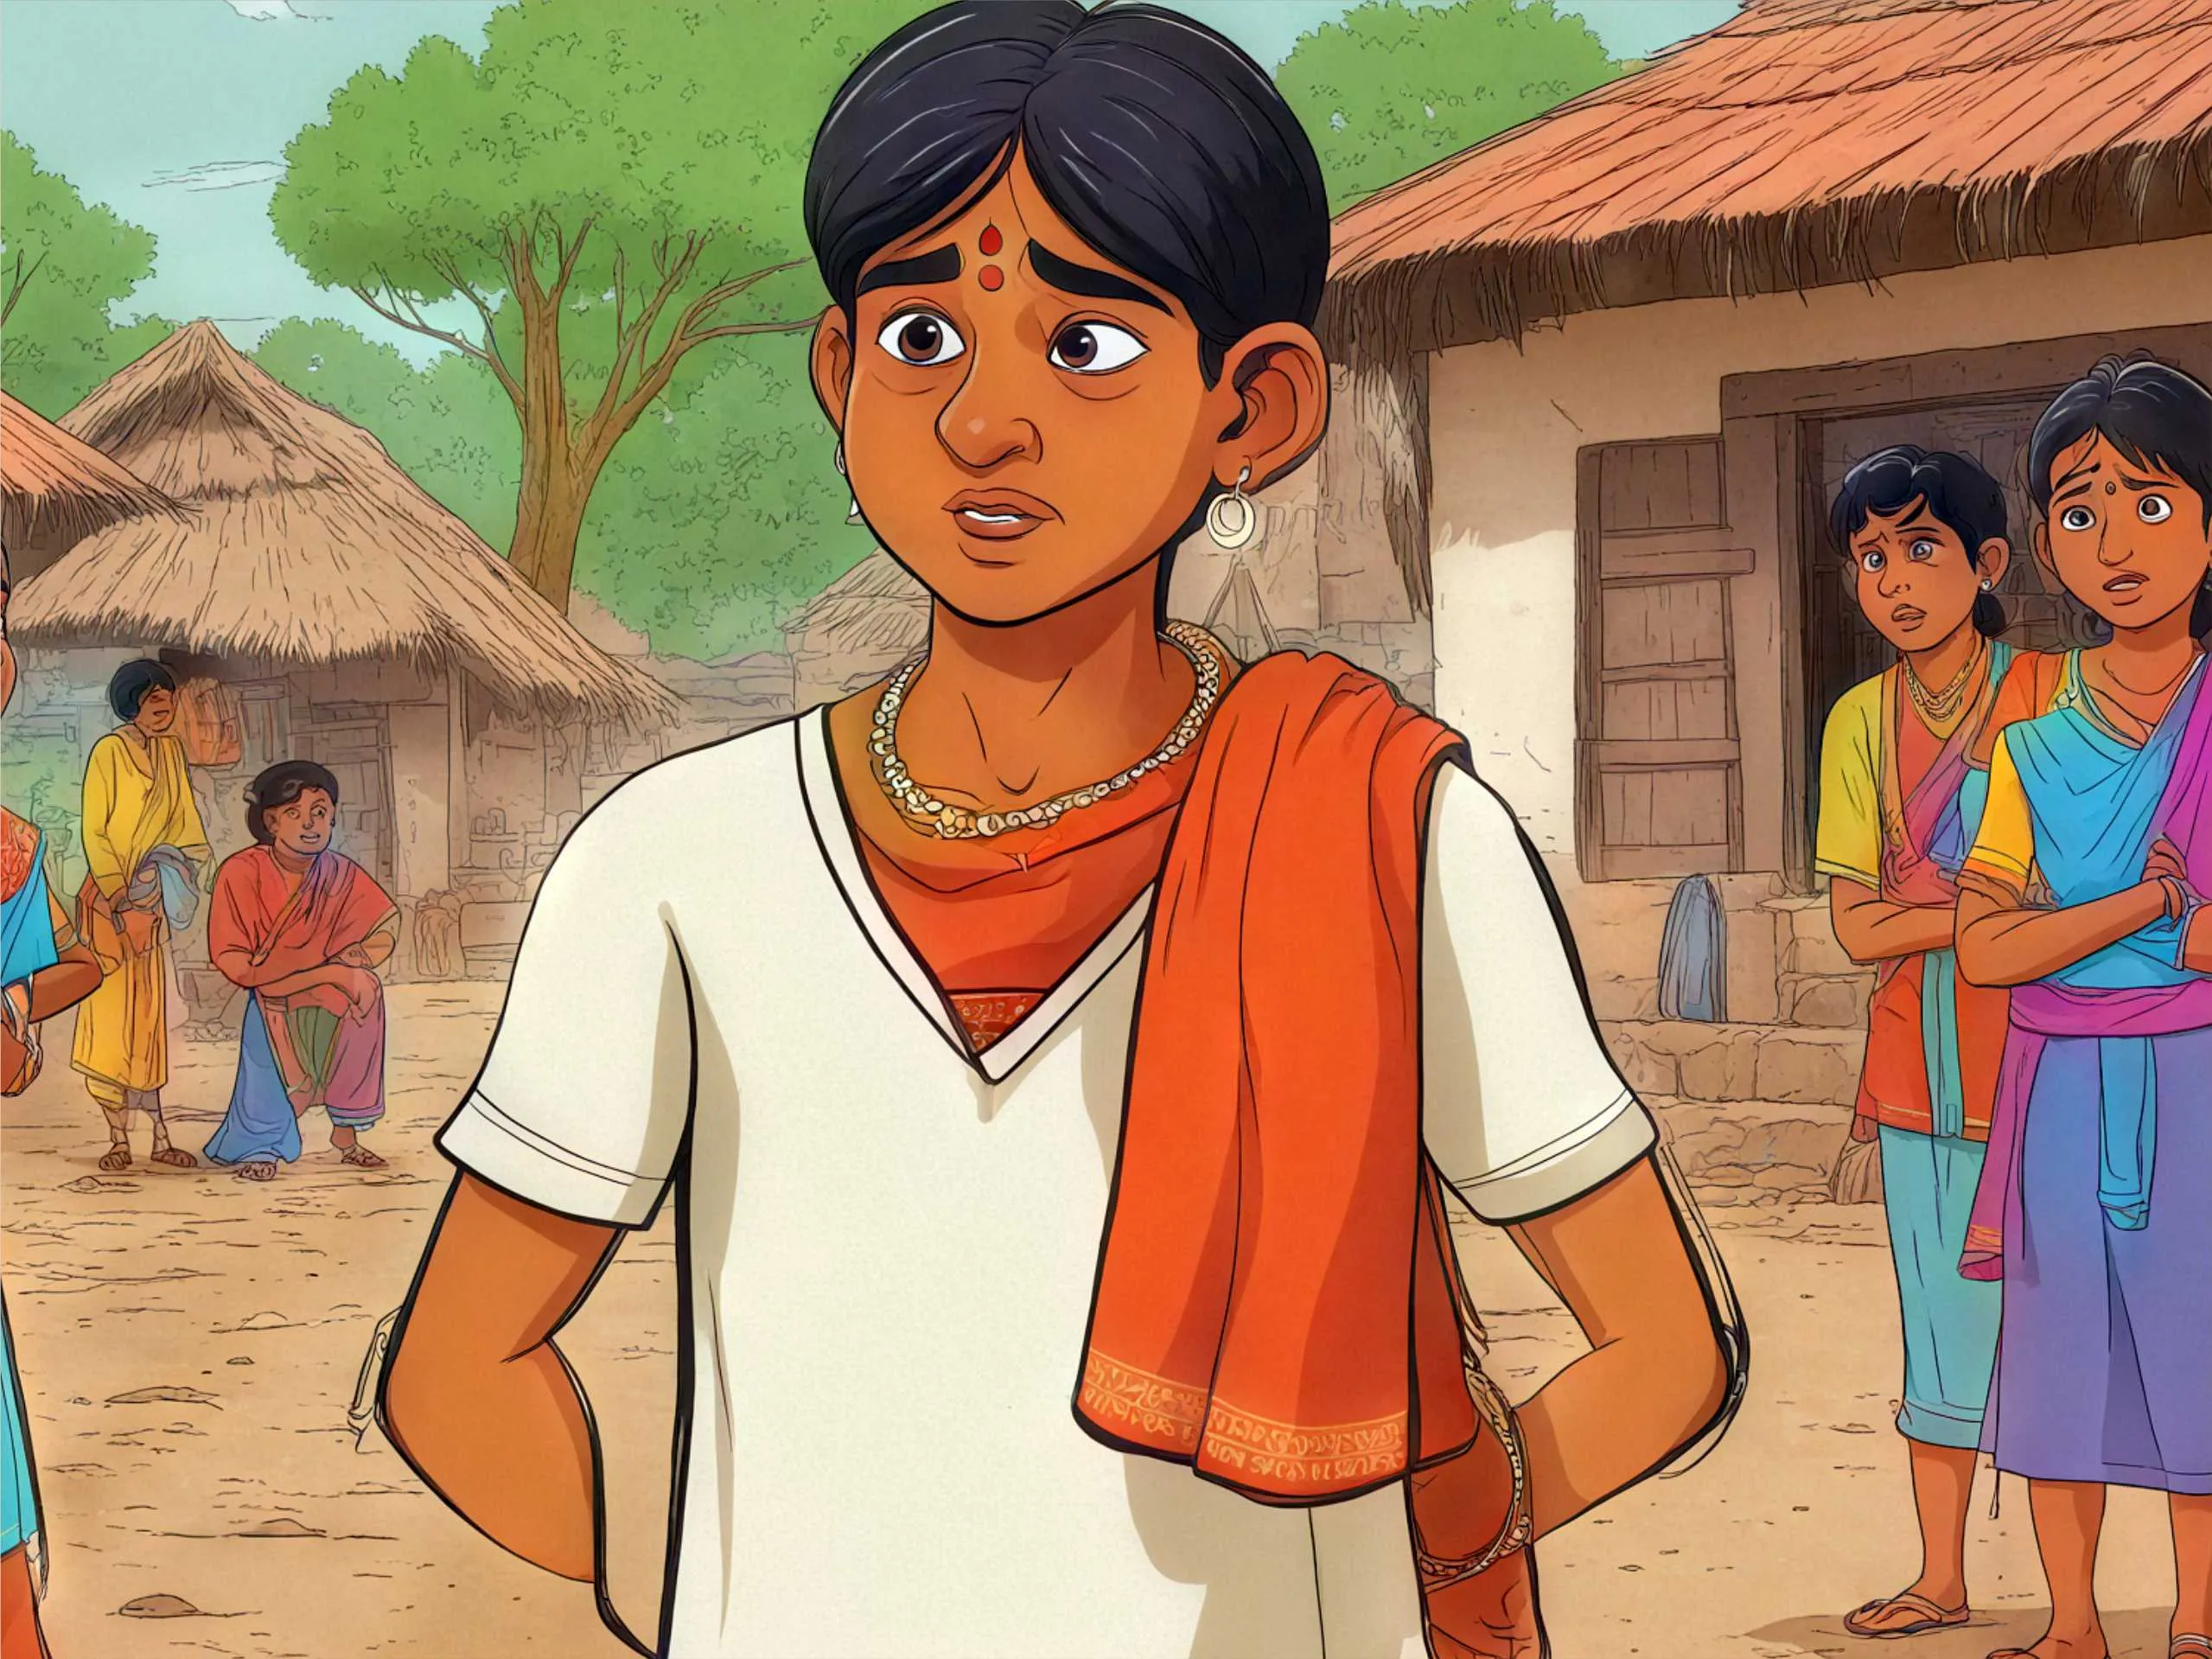 cartoon image of an Indian Village boy